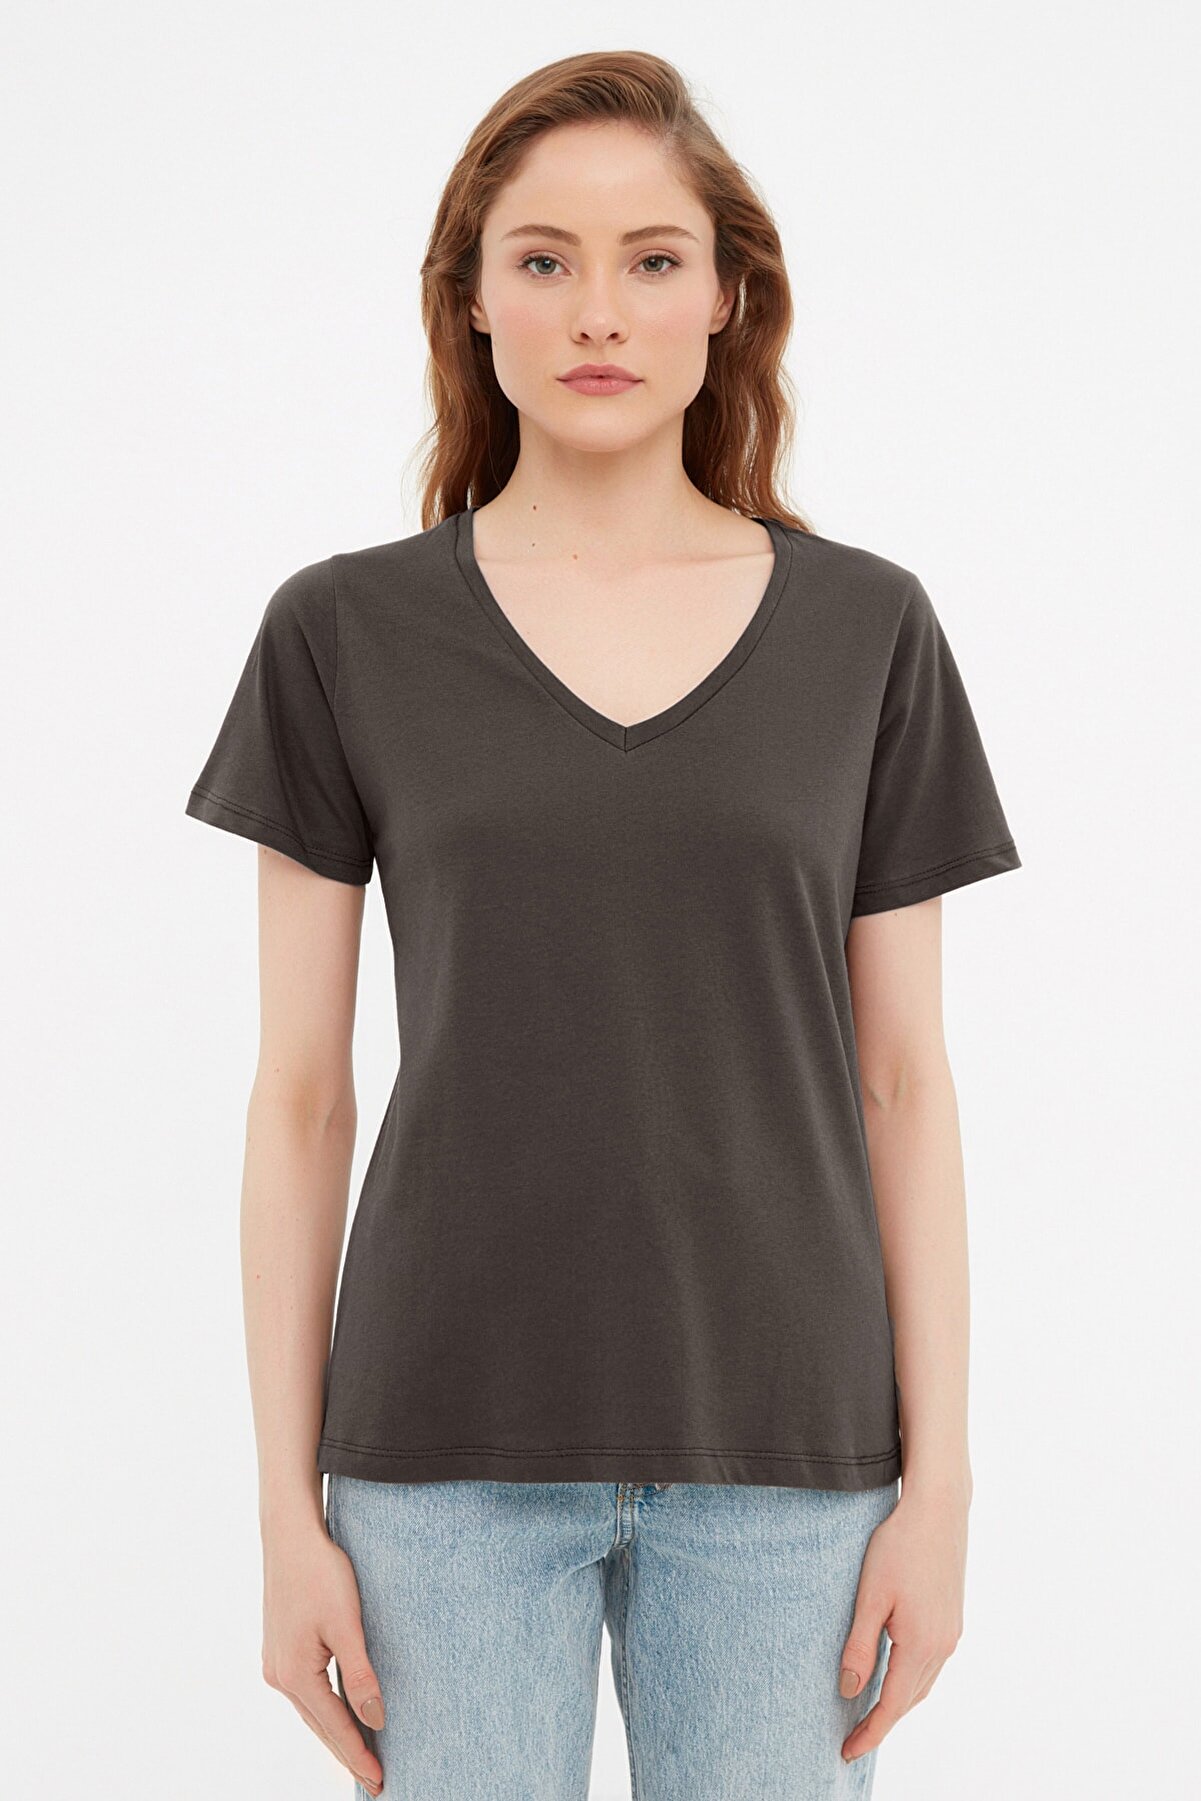 TRENDYOLMİLLA Kahverengi V Yaka Basic Örme T-Shirt TWOSS20TS0129